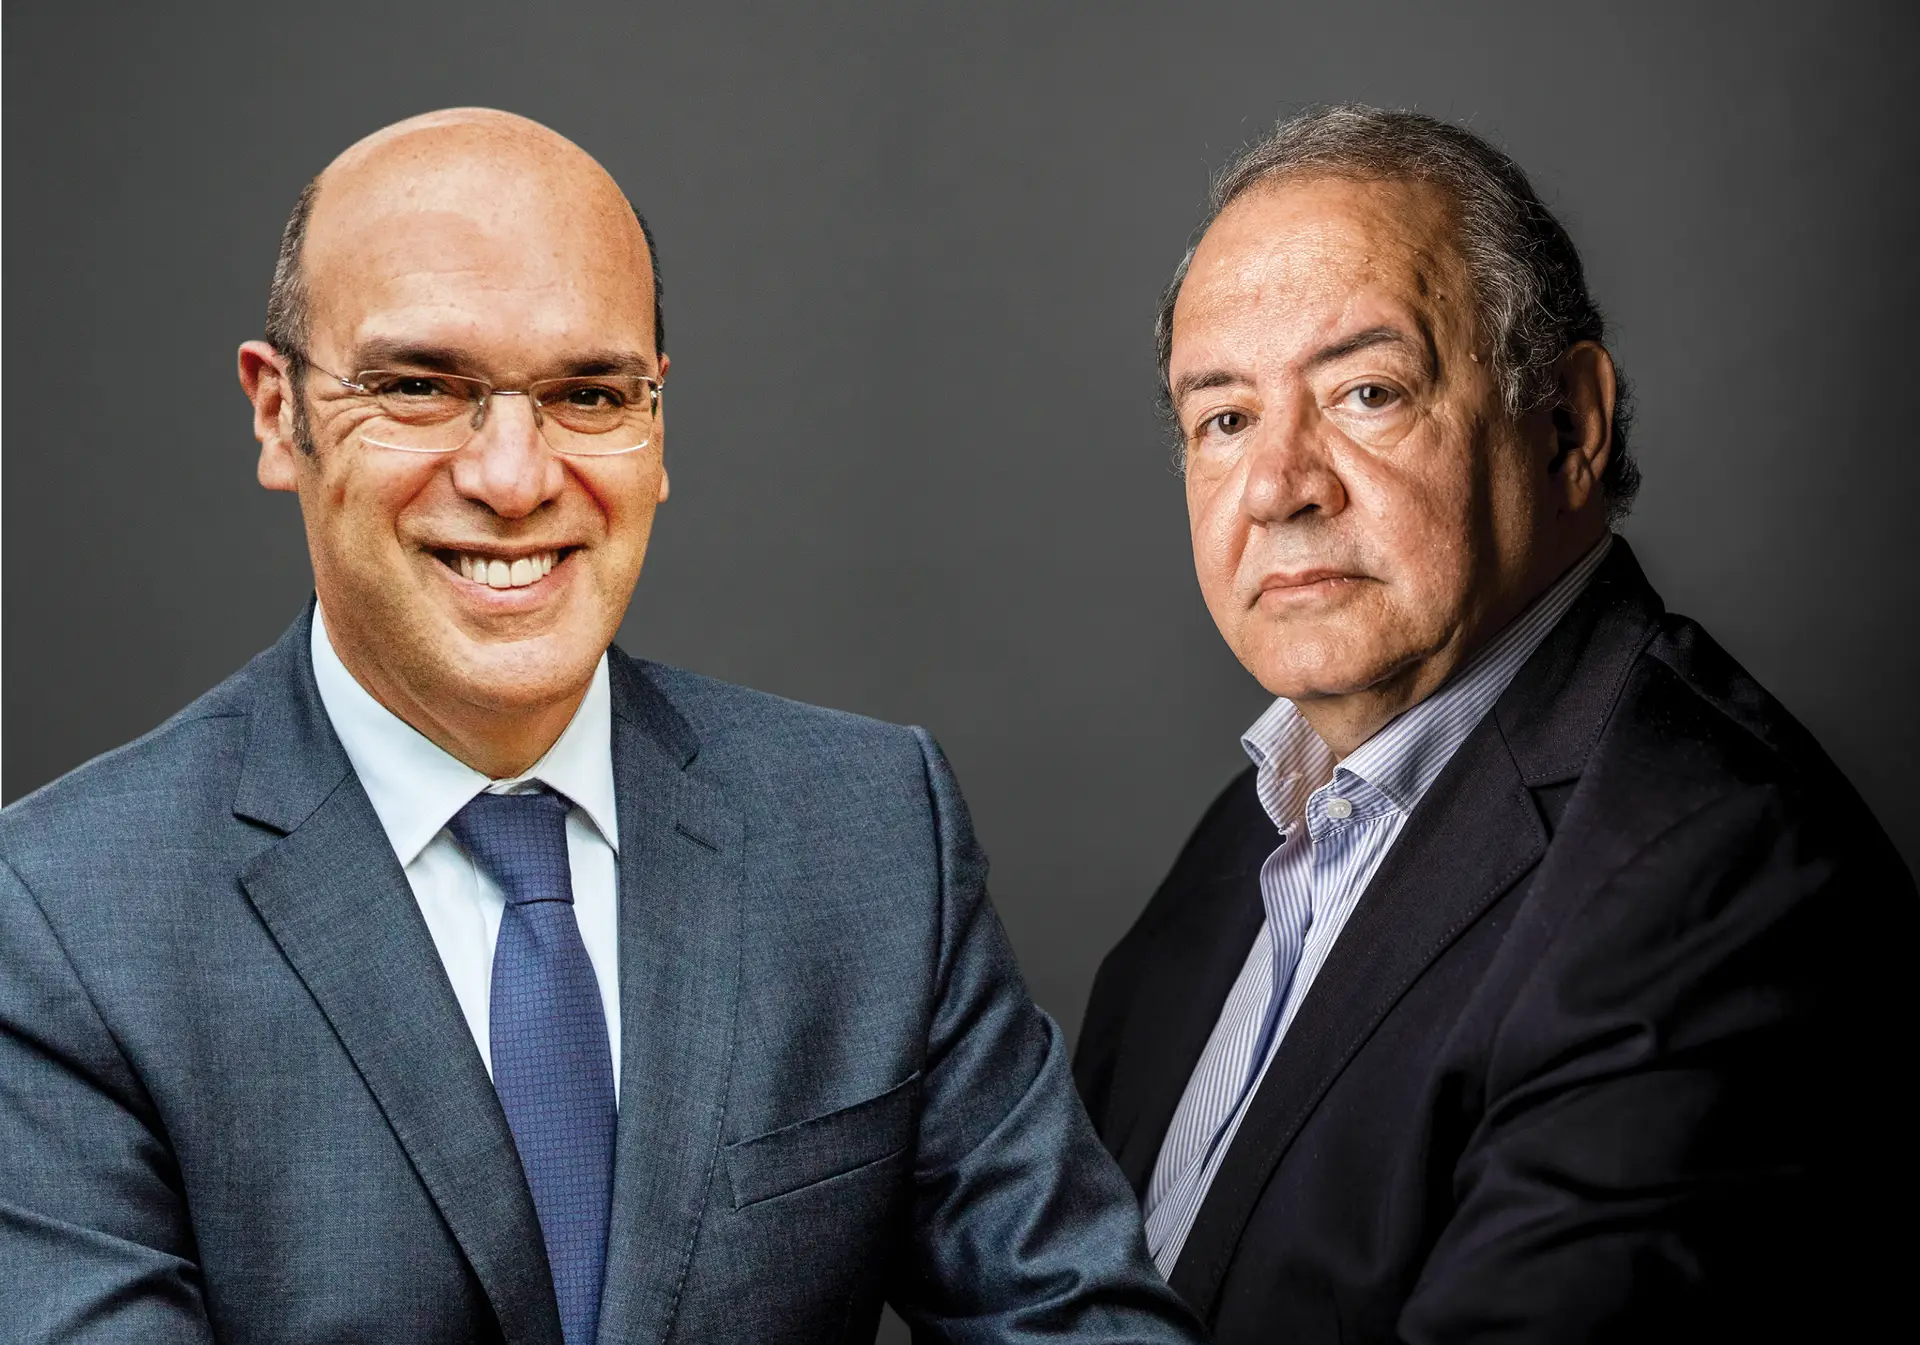 O antigo e o atual ministro da Economia, Pedro Siza Vieira (presente na conferência) e António Costa Silva, enfrentaram contextos muito distintos